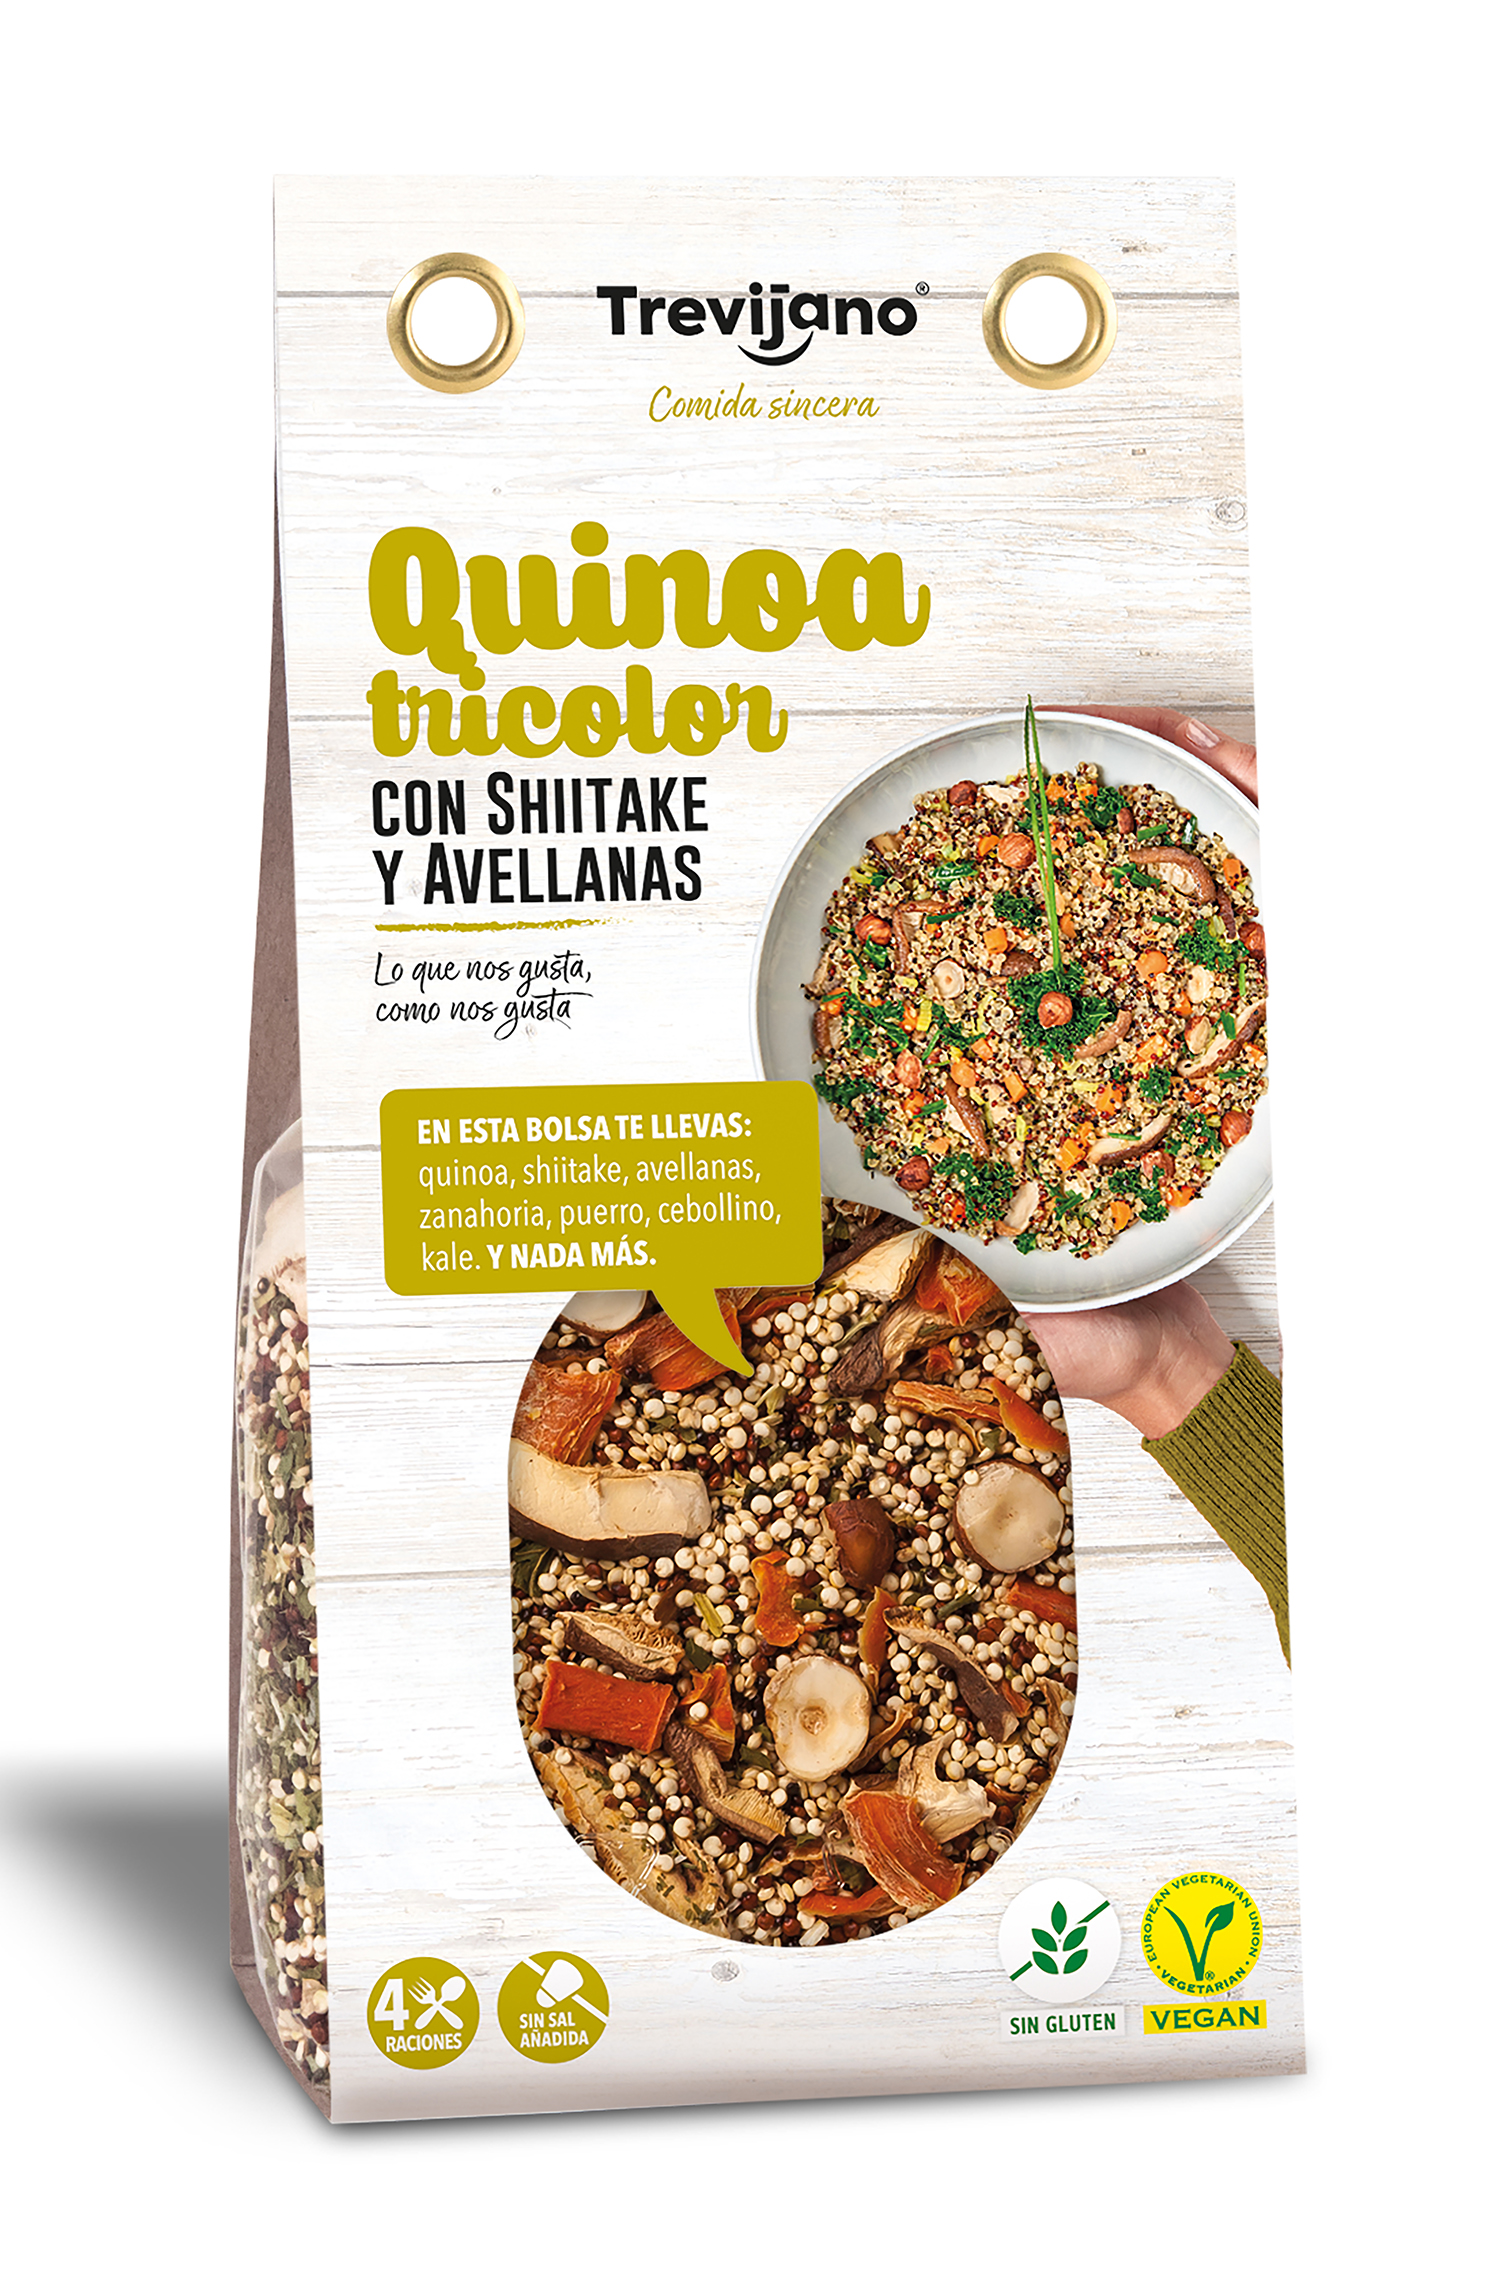 Buy Organic Tricolor Quinoa with Veggies Online